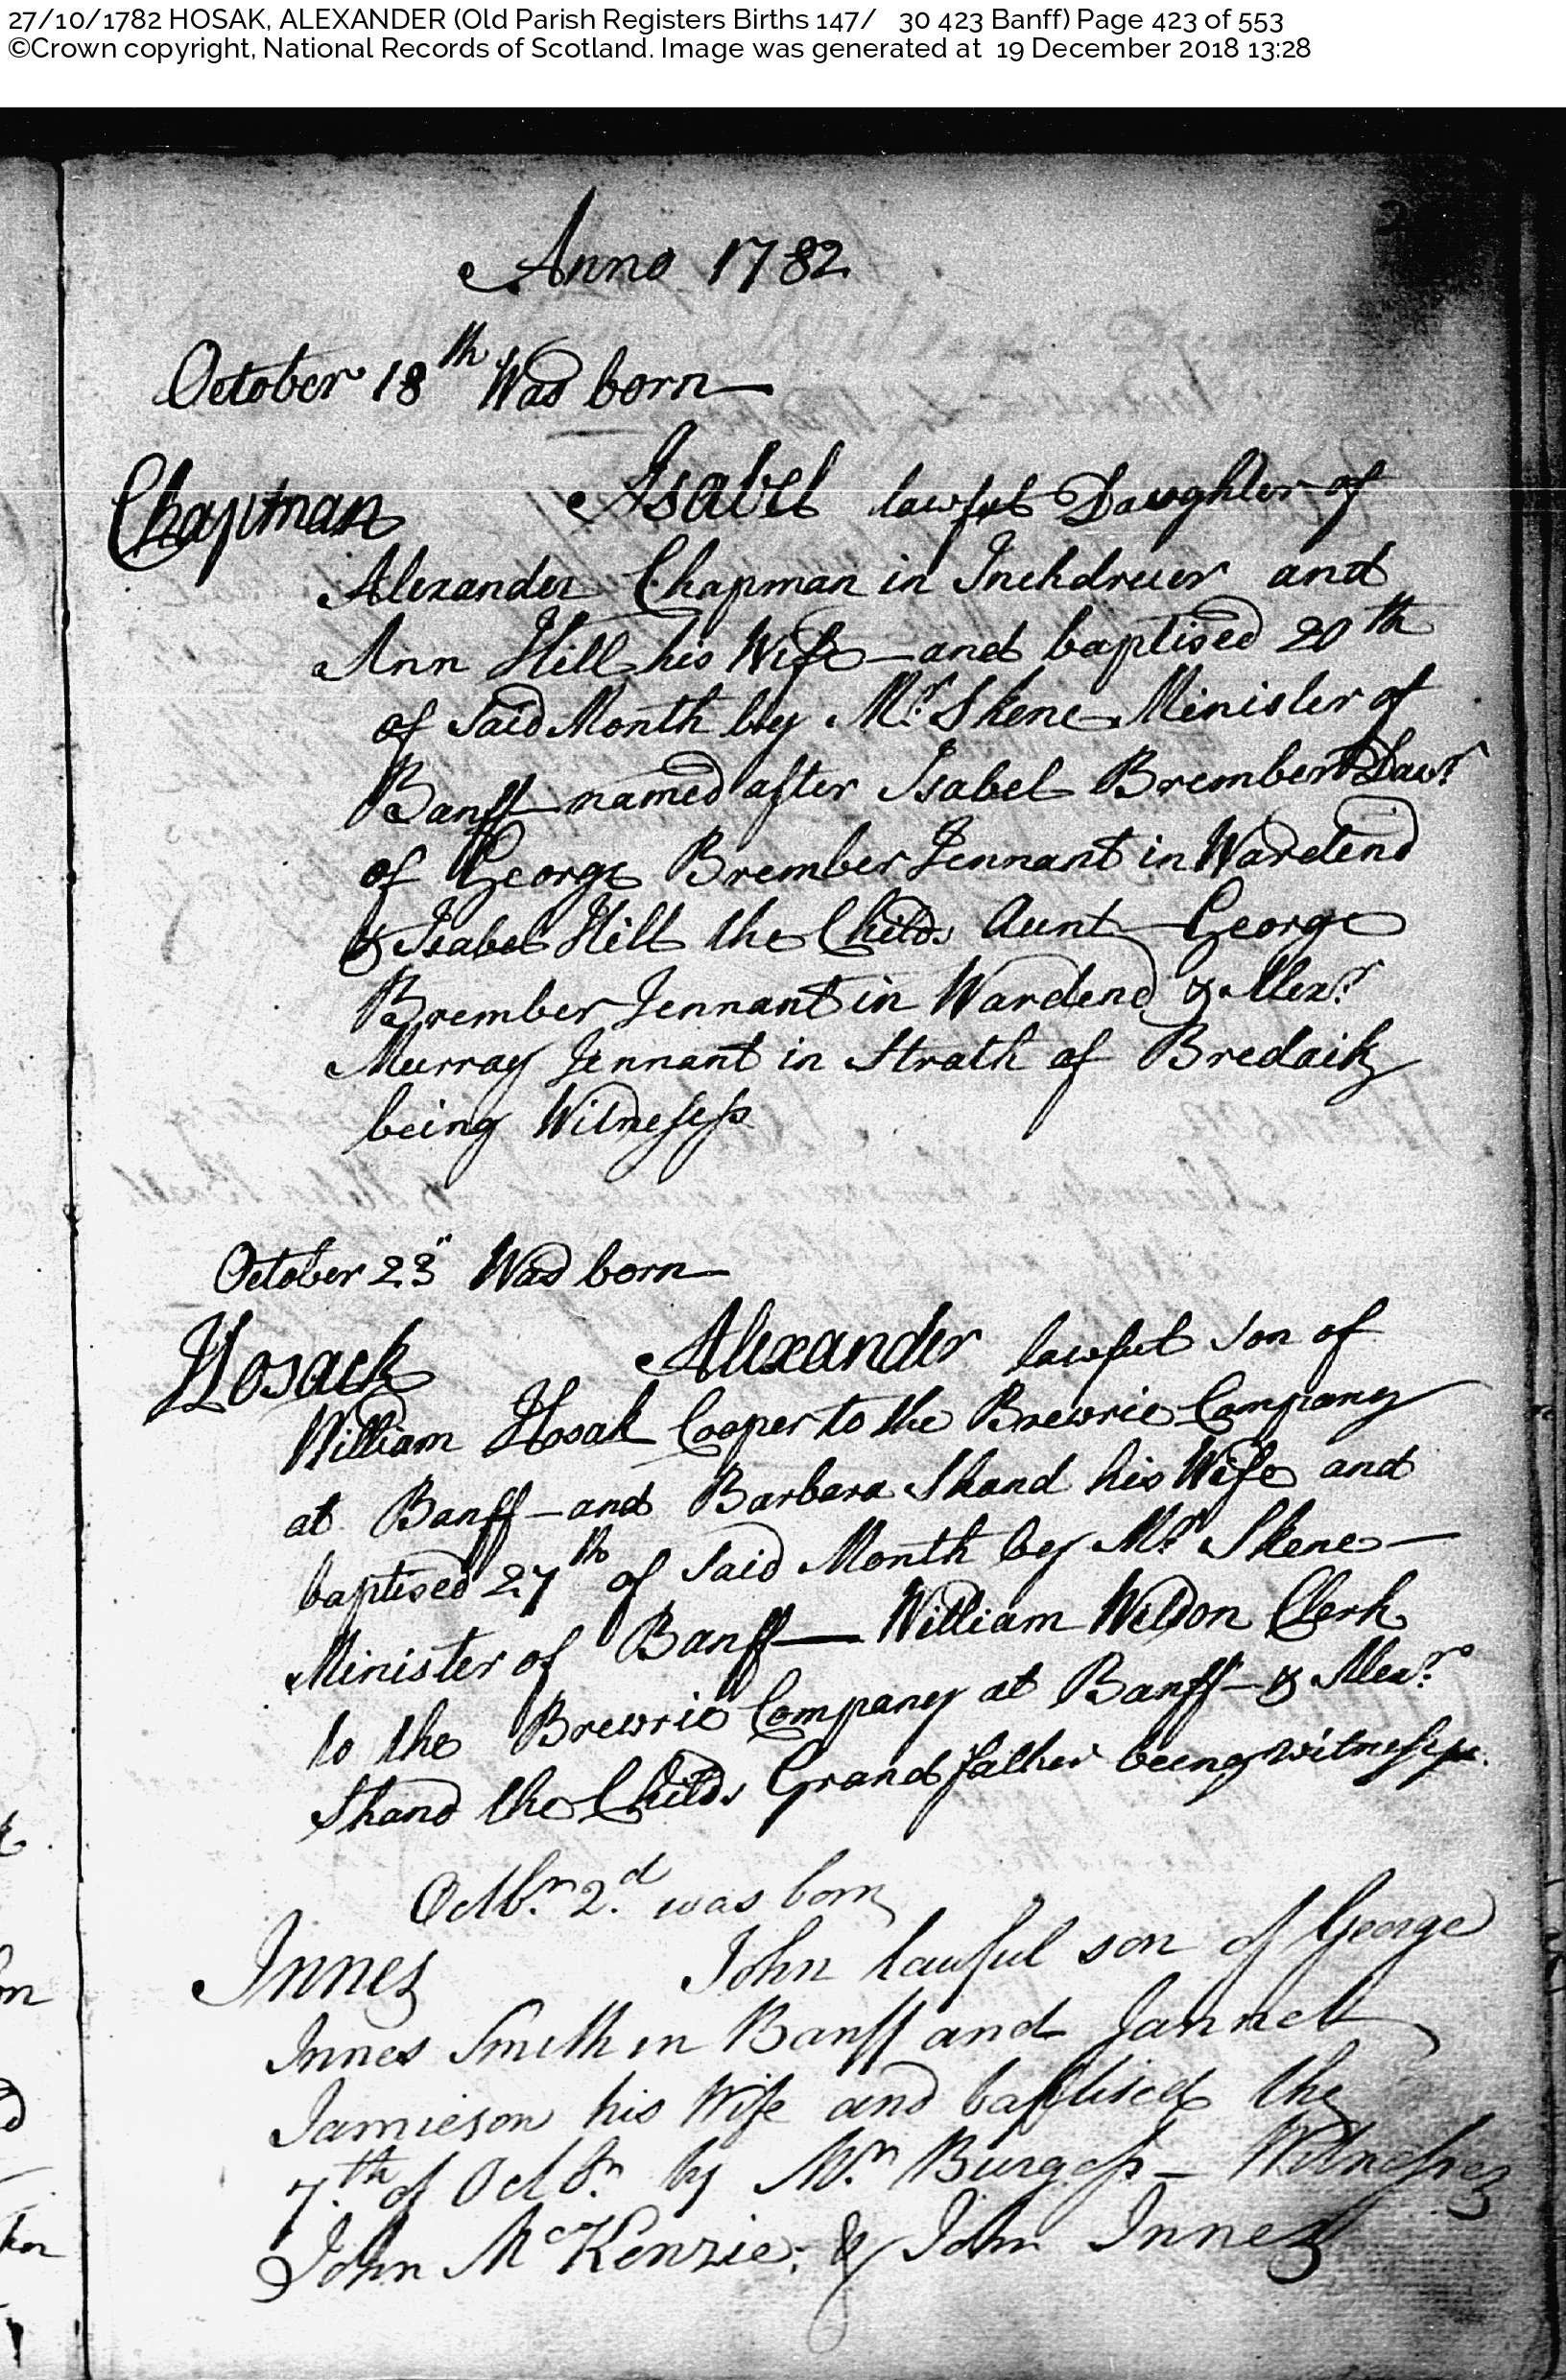 AlexanderHossack_B1782 Banff, October 23, 1782